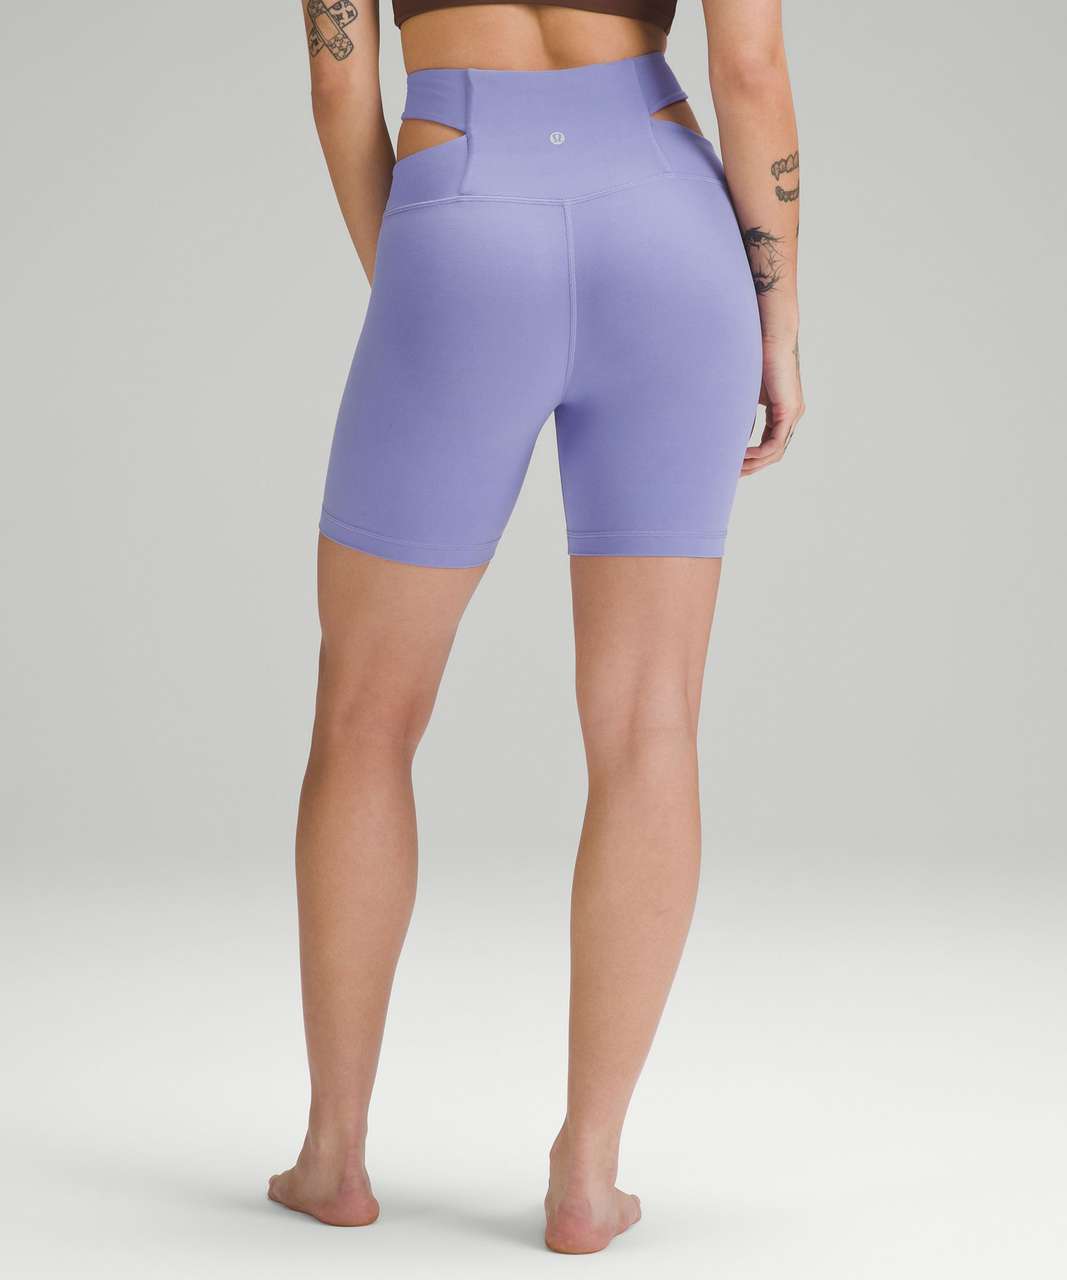 lululemon Align shorts 🤝 every outfit ever #lululemoncreator #ad